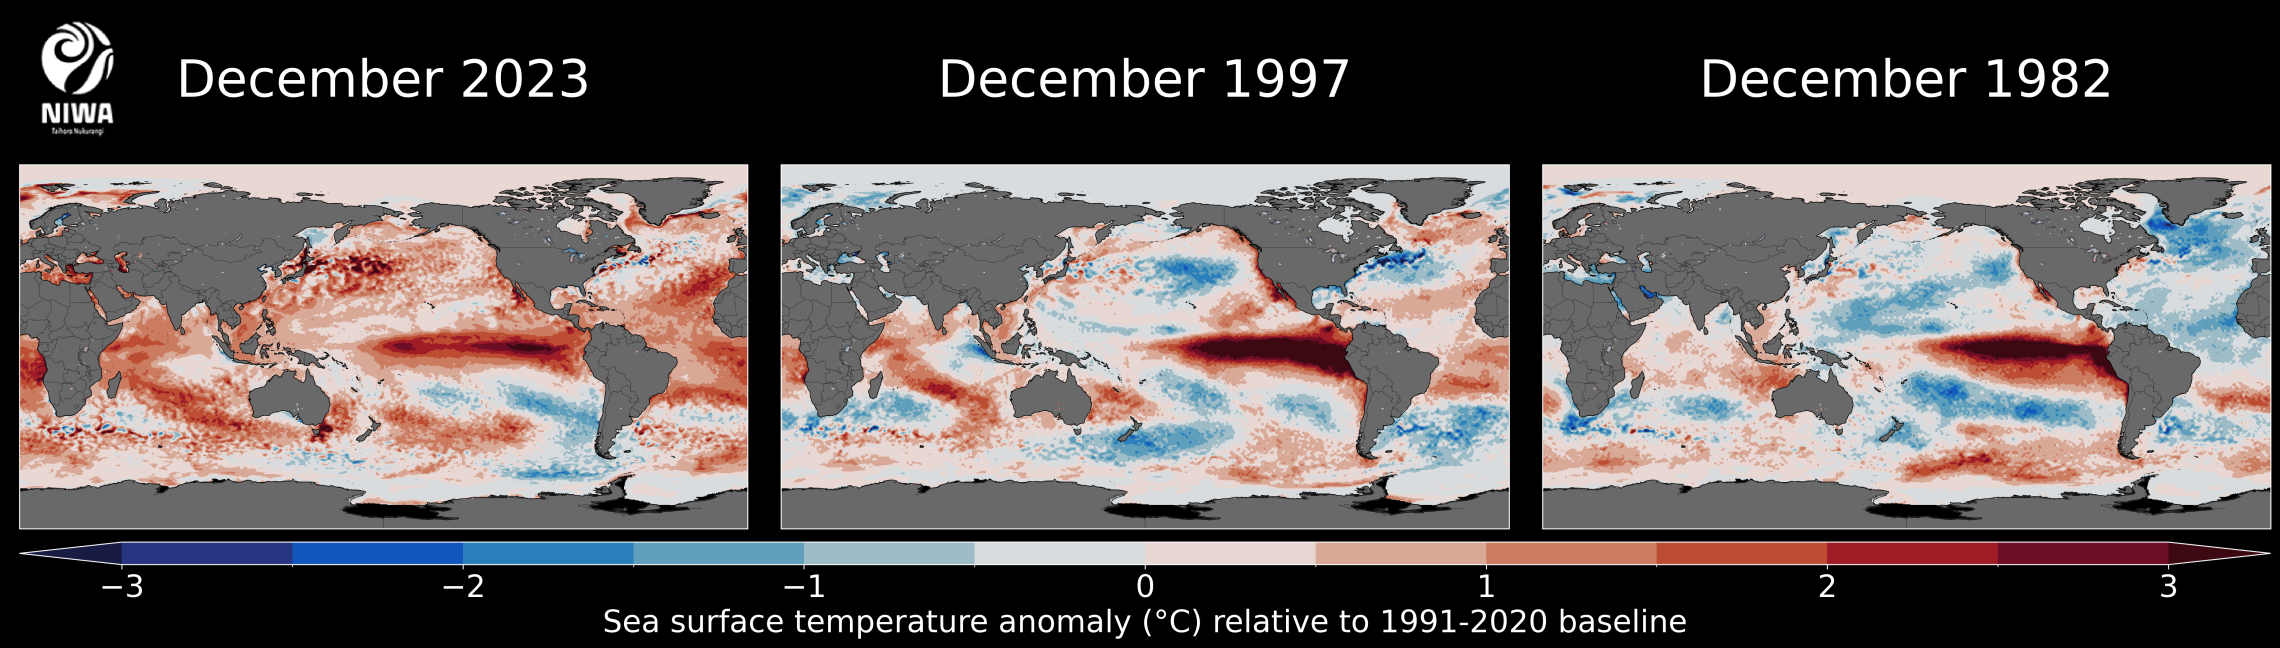 2023 Annual Climate Summary - Sea surface temperature